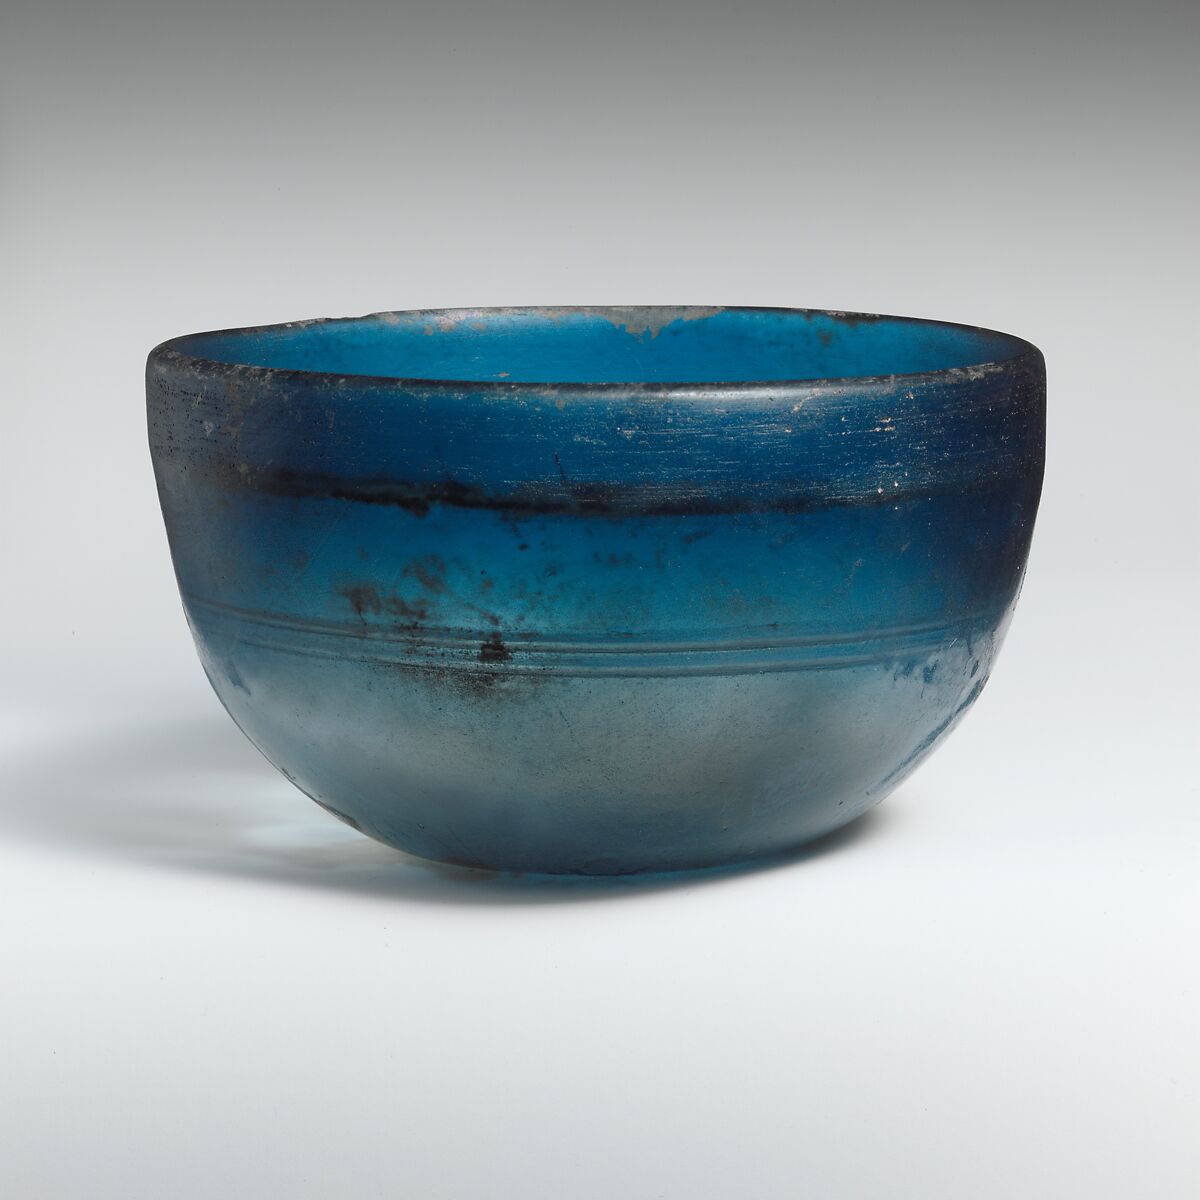 Glass hemispherical bowl, Glass, Greek, Eastern Mediterranean 